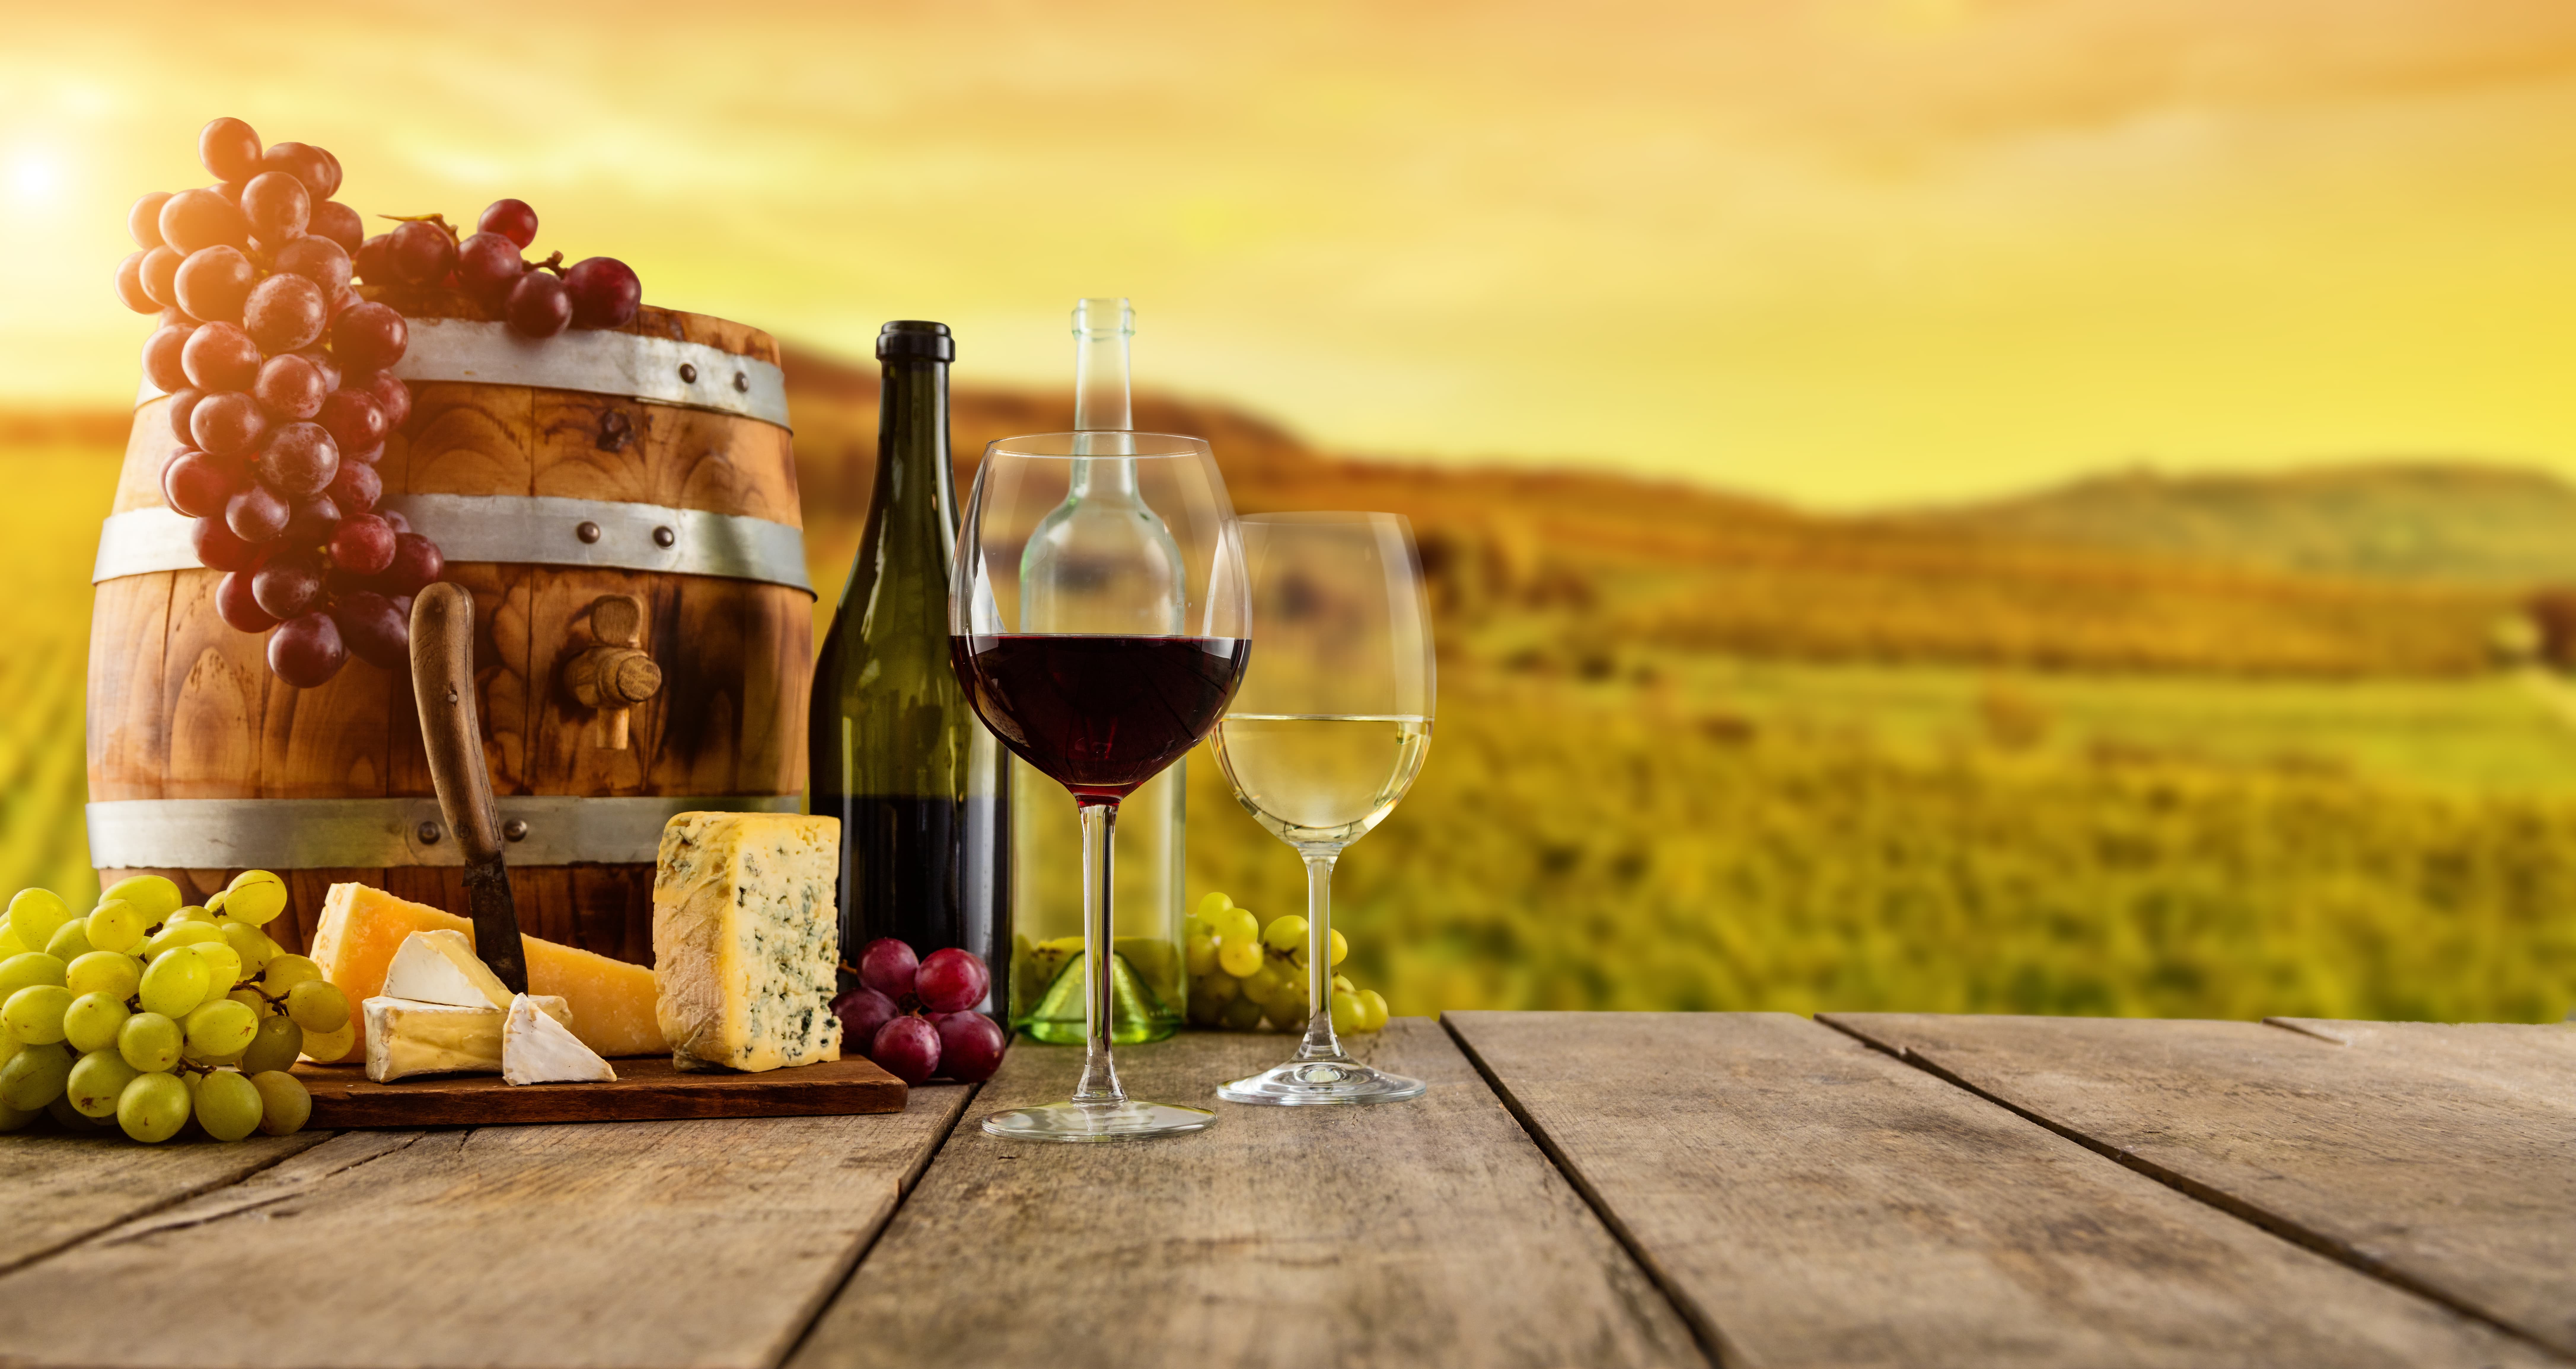 La Rioja wine spread